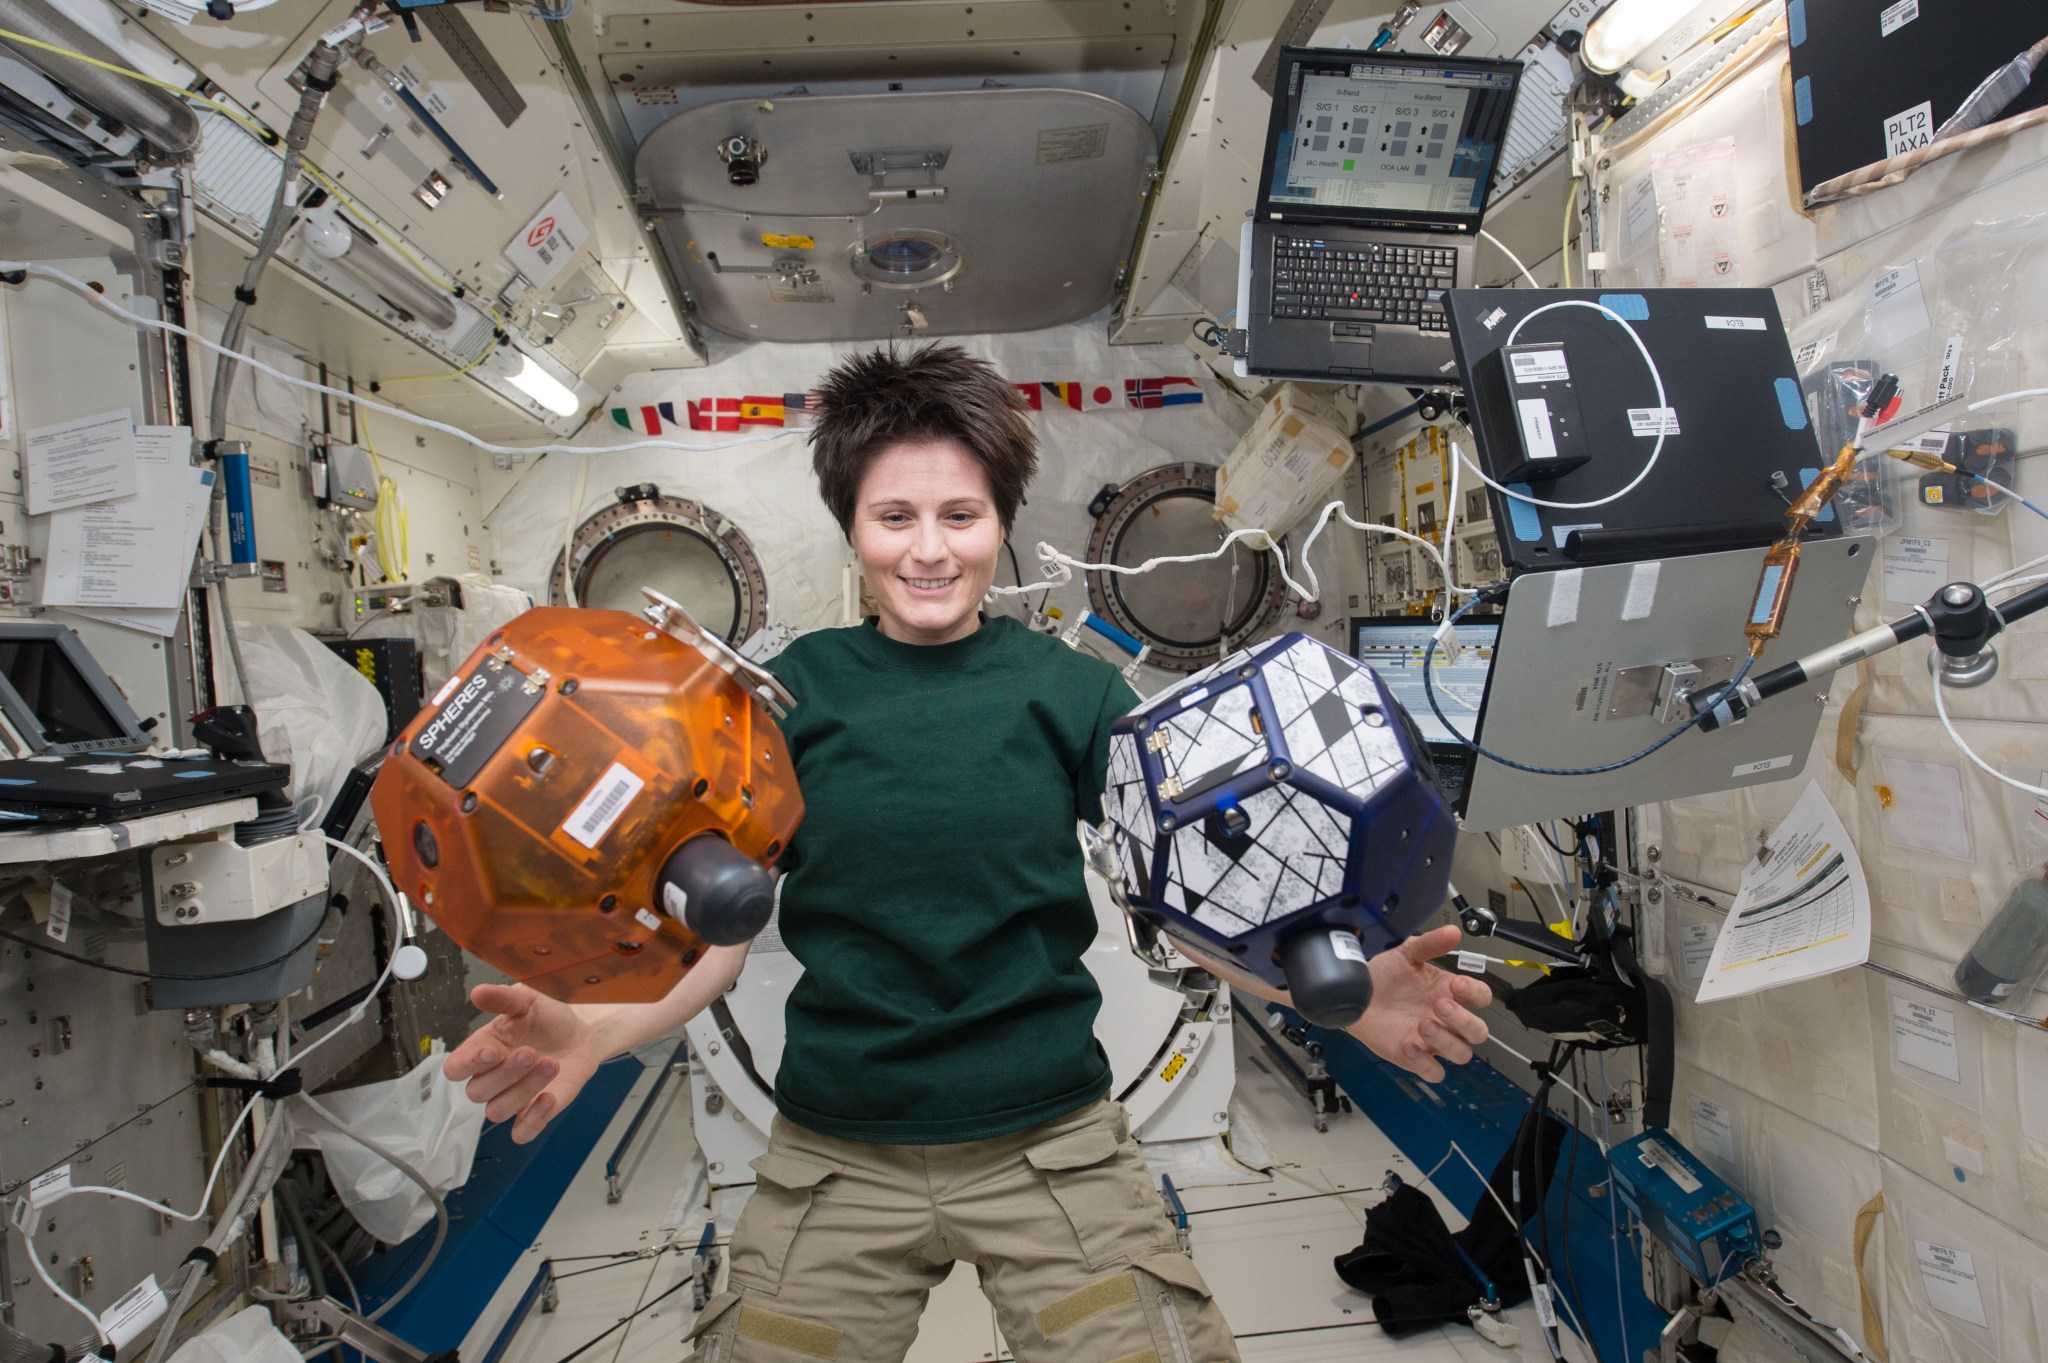 European Space Agency astronaut Samantha Cristoforetti